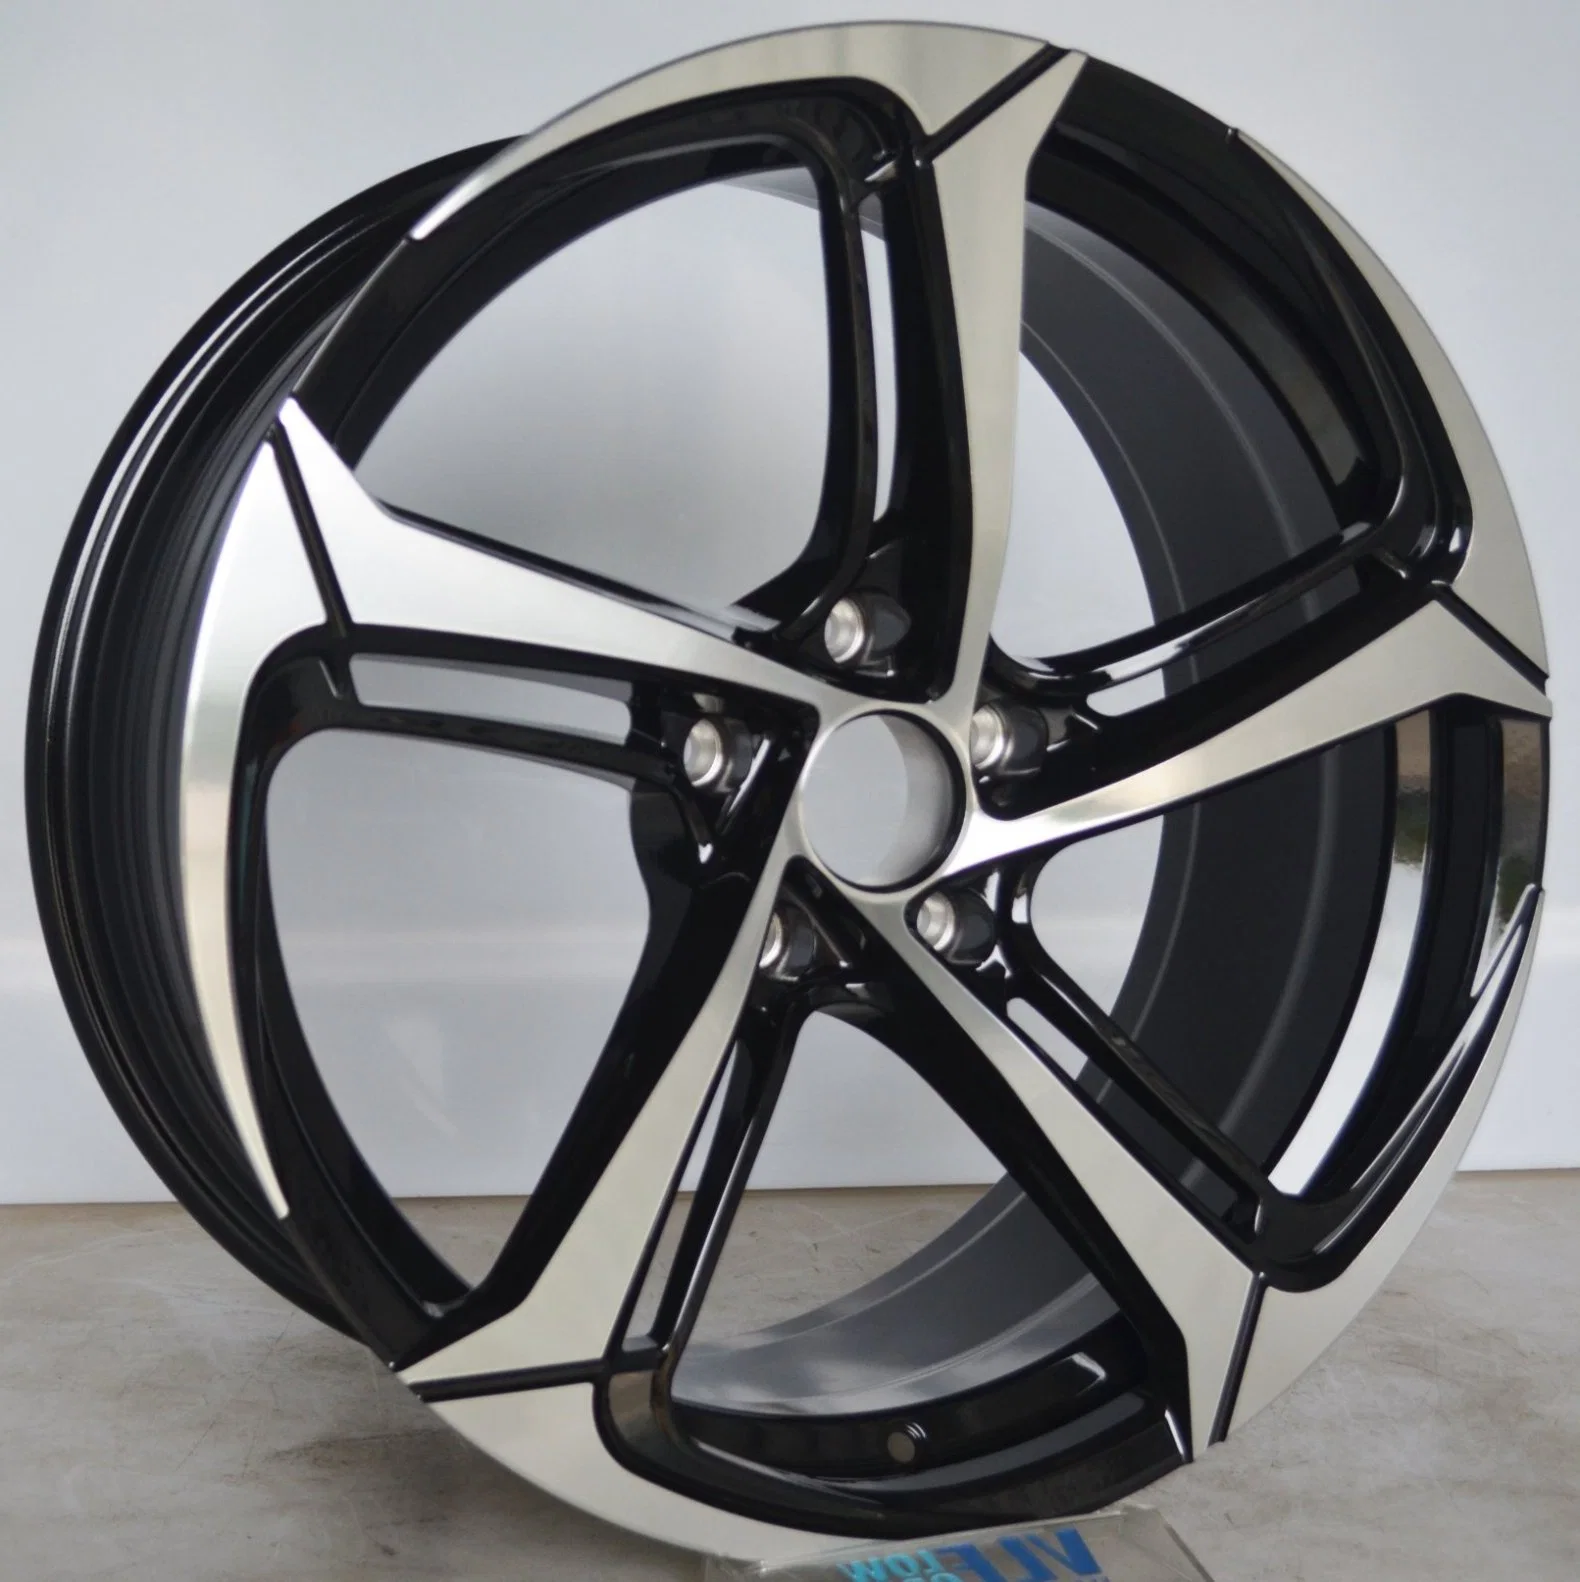 Casting Replica 16inch Black Chrome Steel Wheels for Car